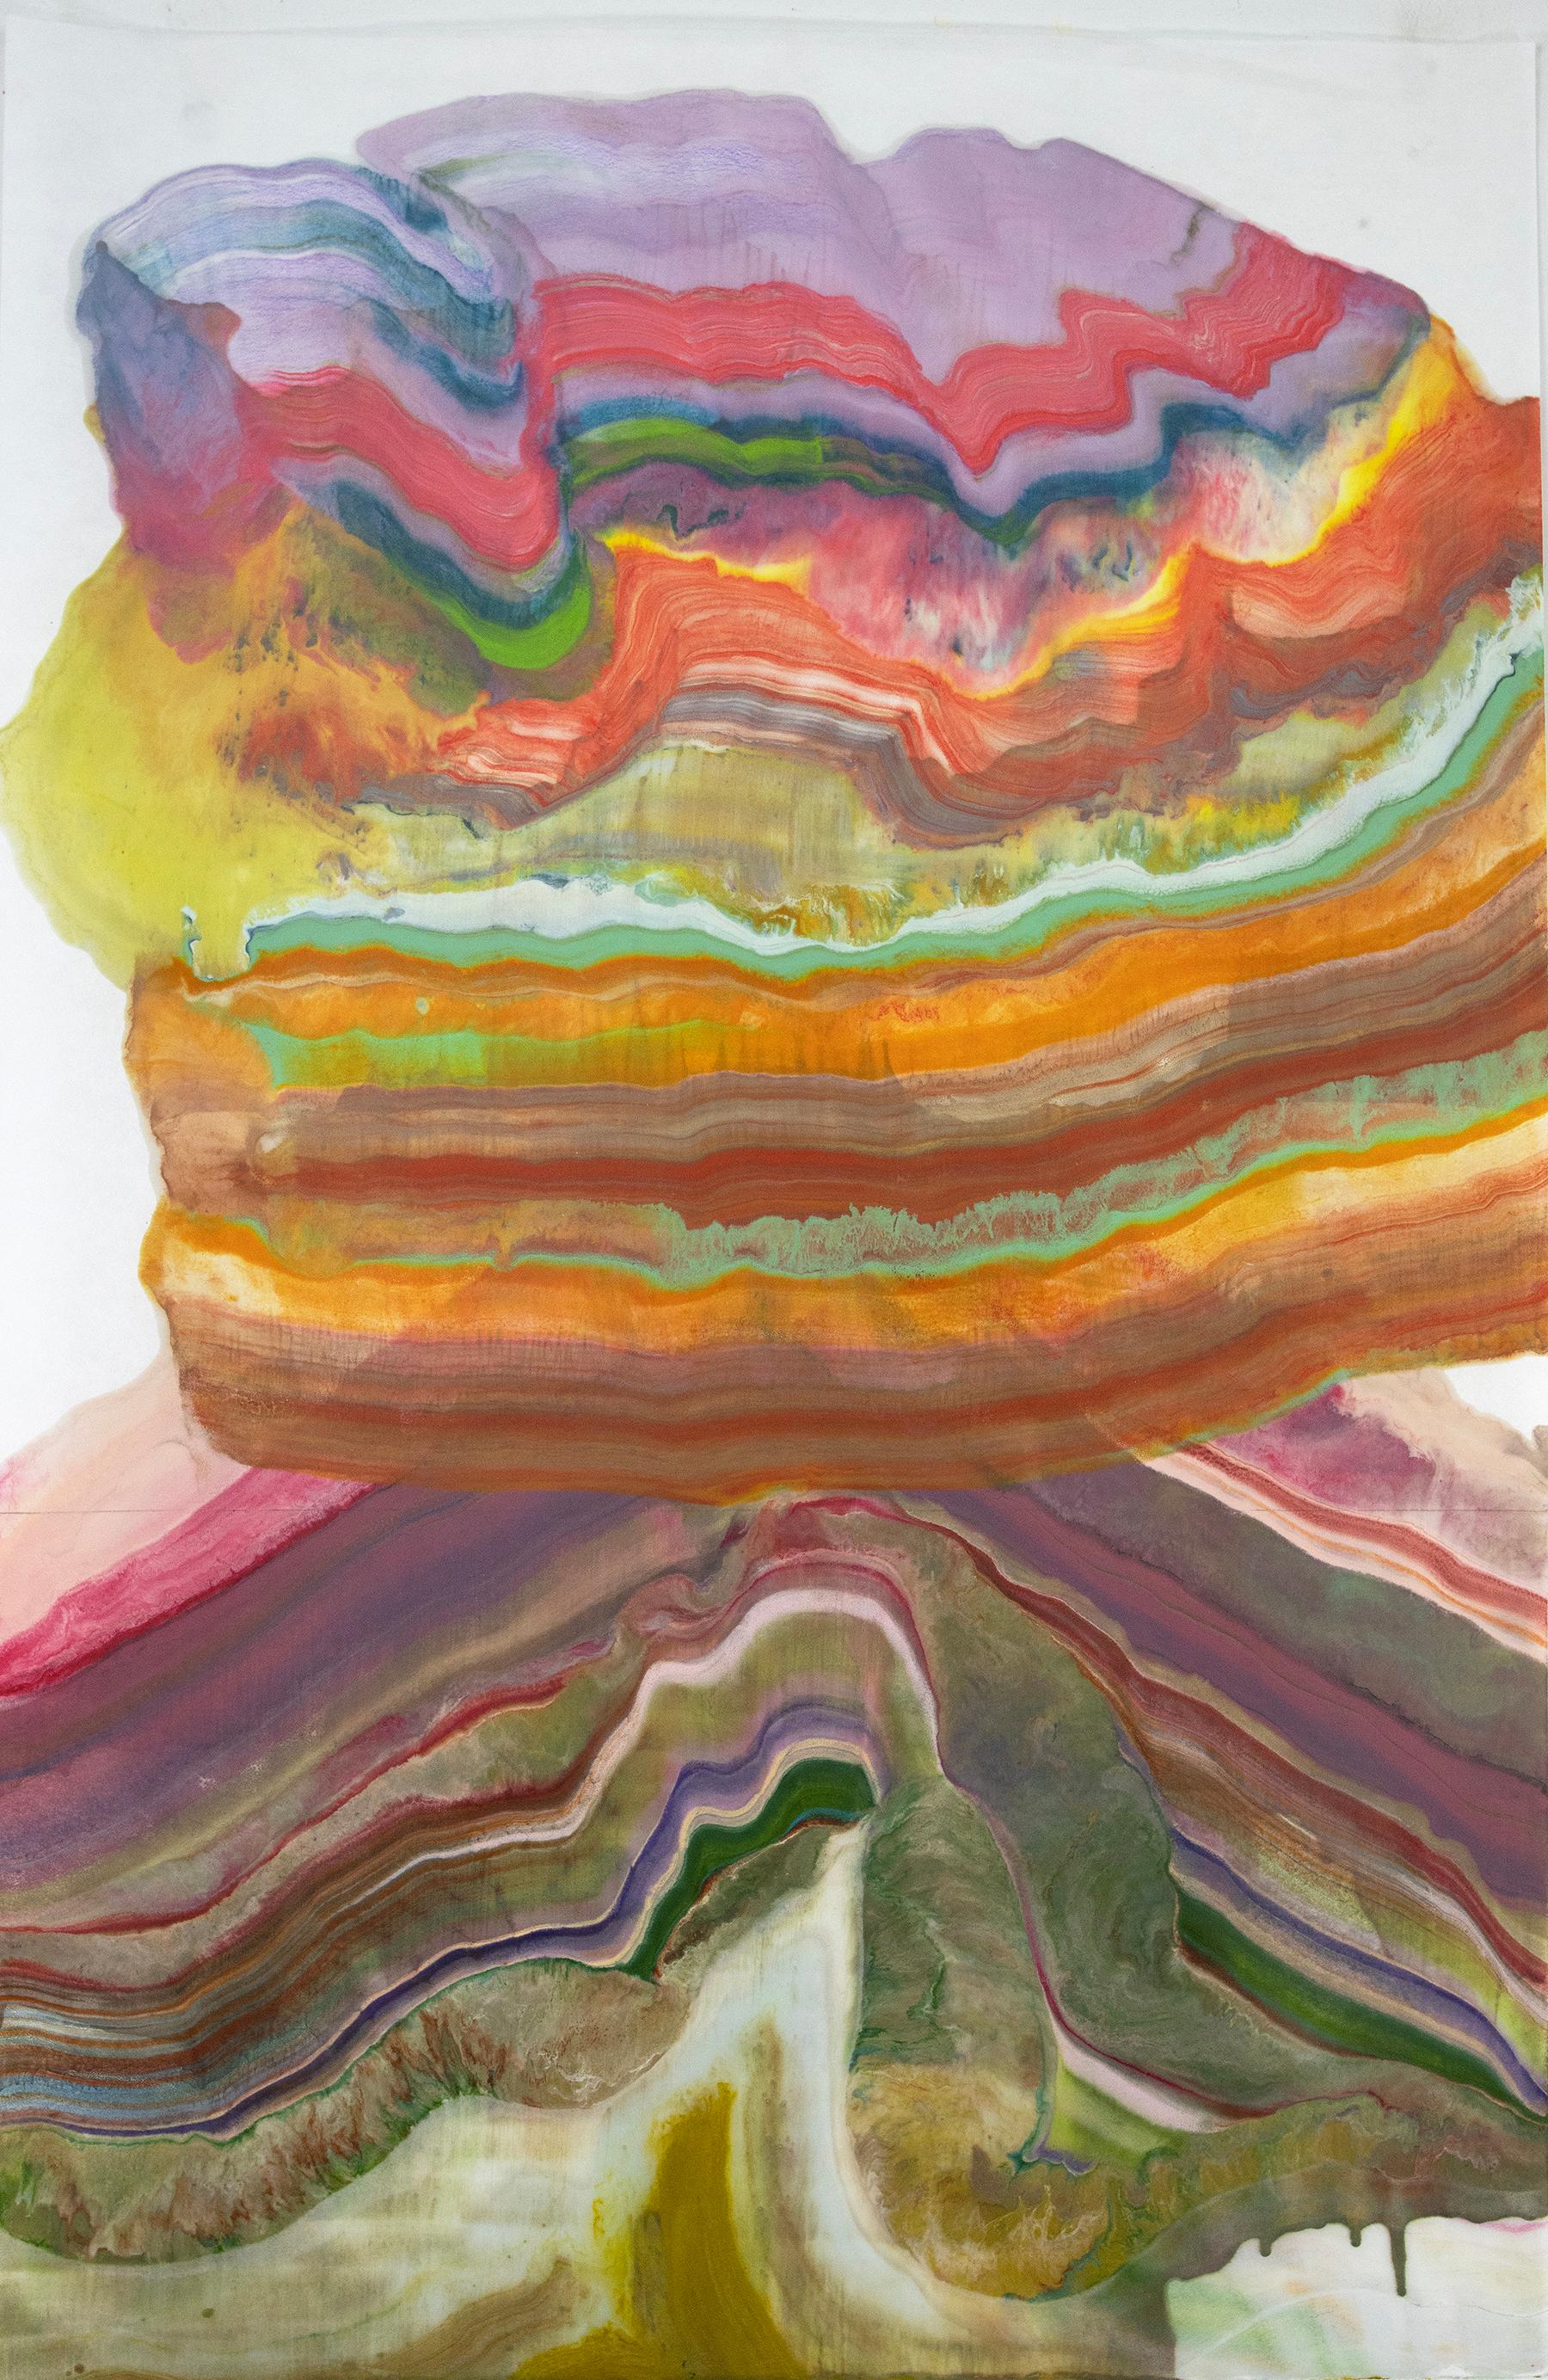 Abstract Print Laura Moriarty - Talking to Rocks 31, monotype à l'encaustique rose, vert, orange safran et jaune